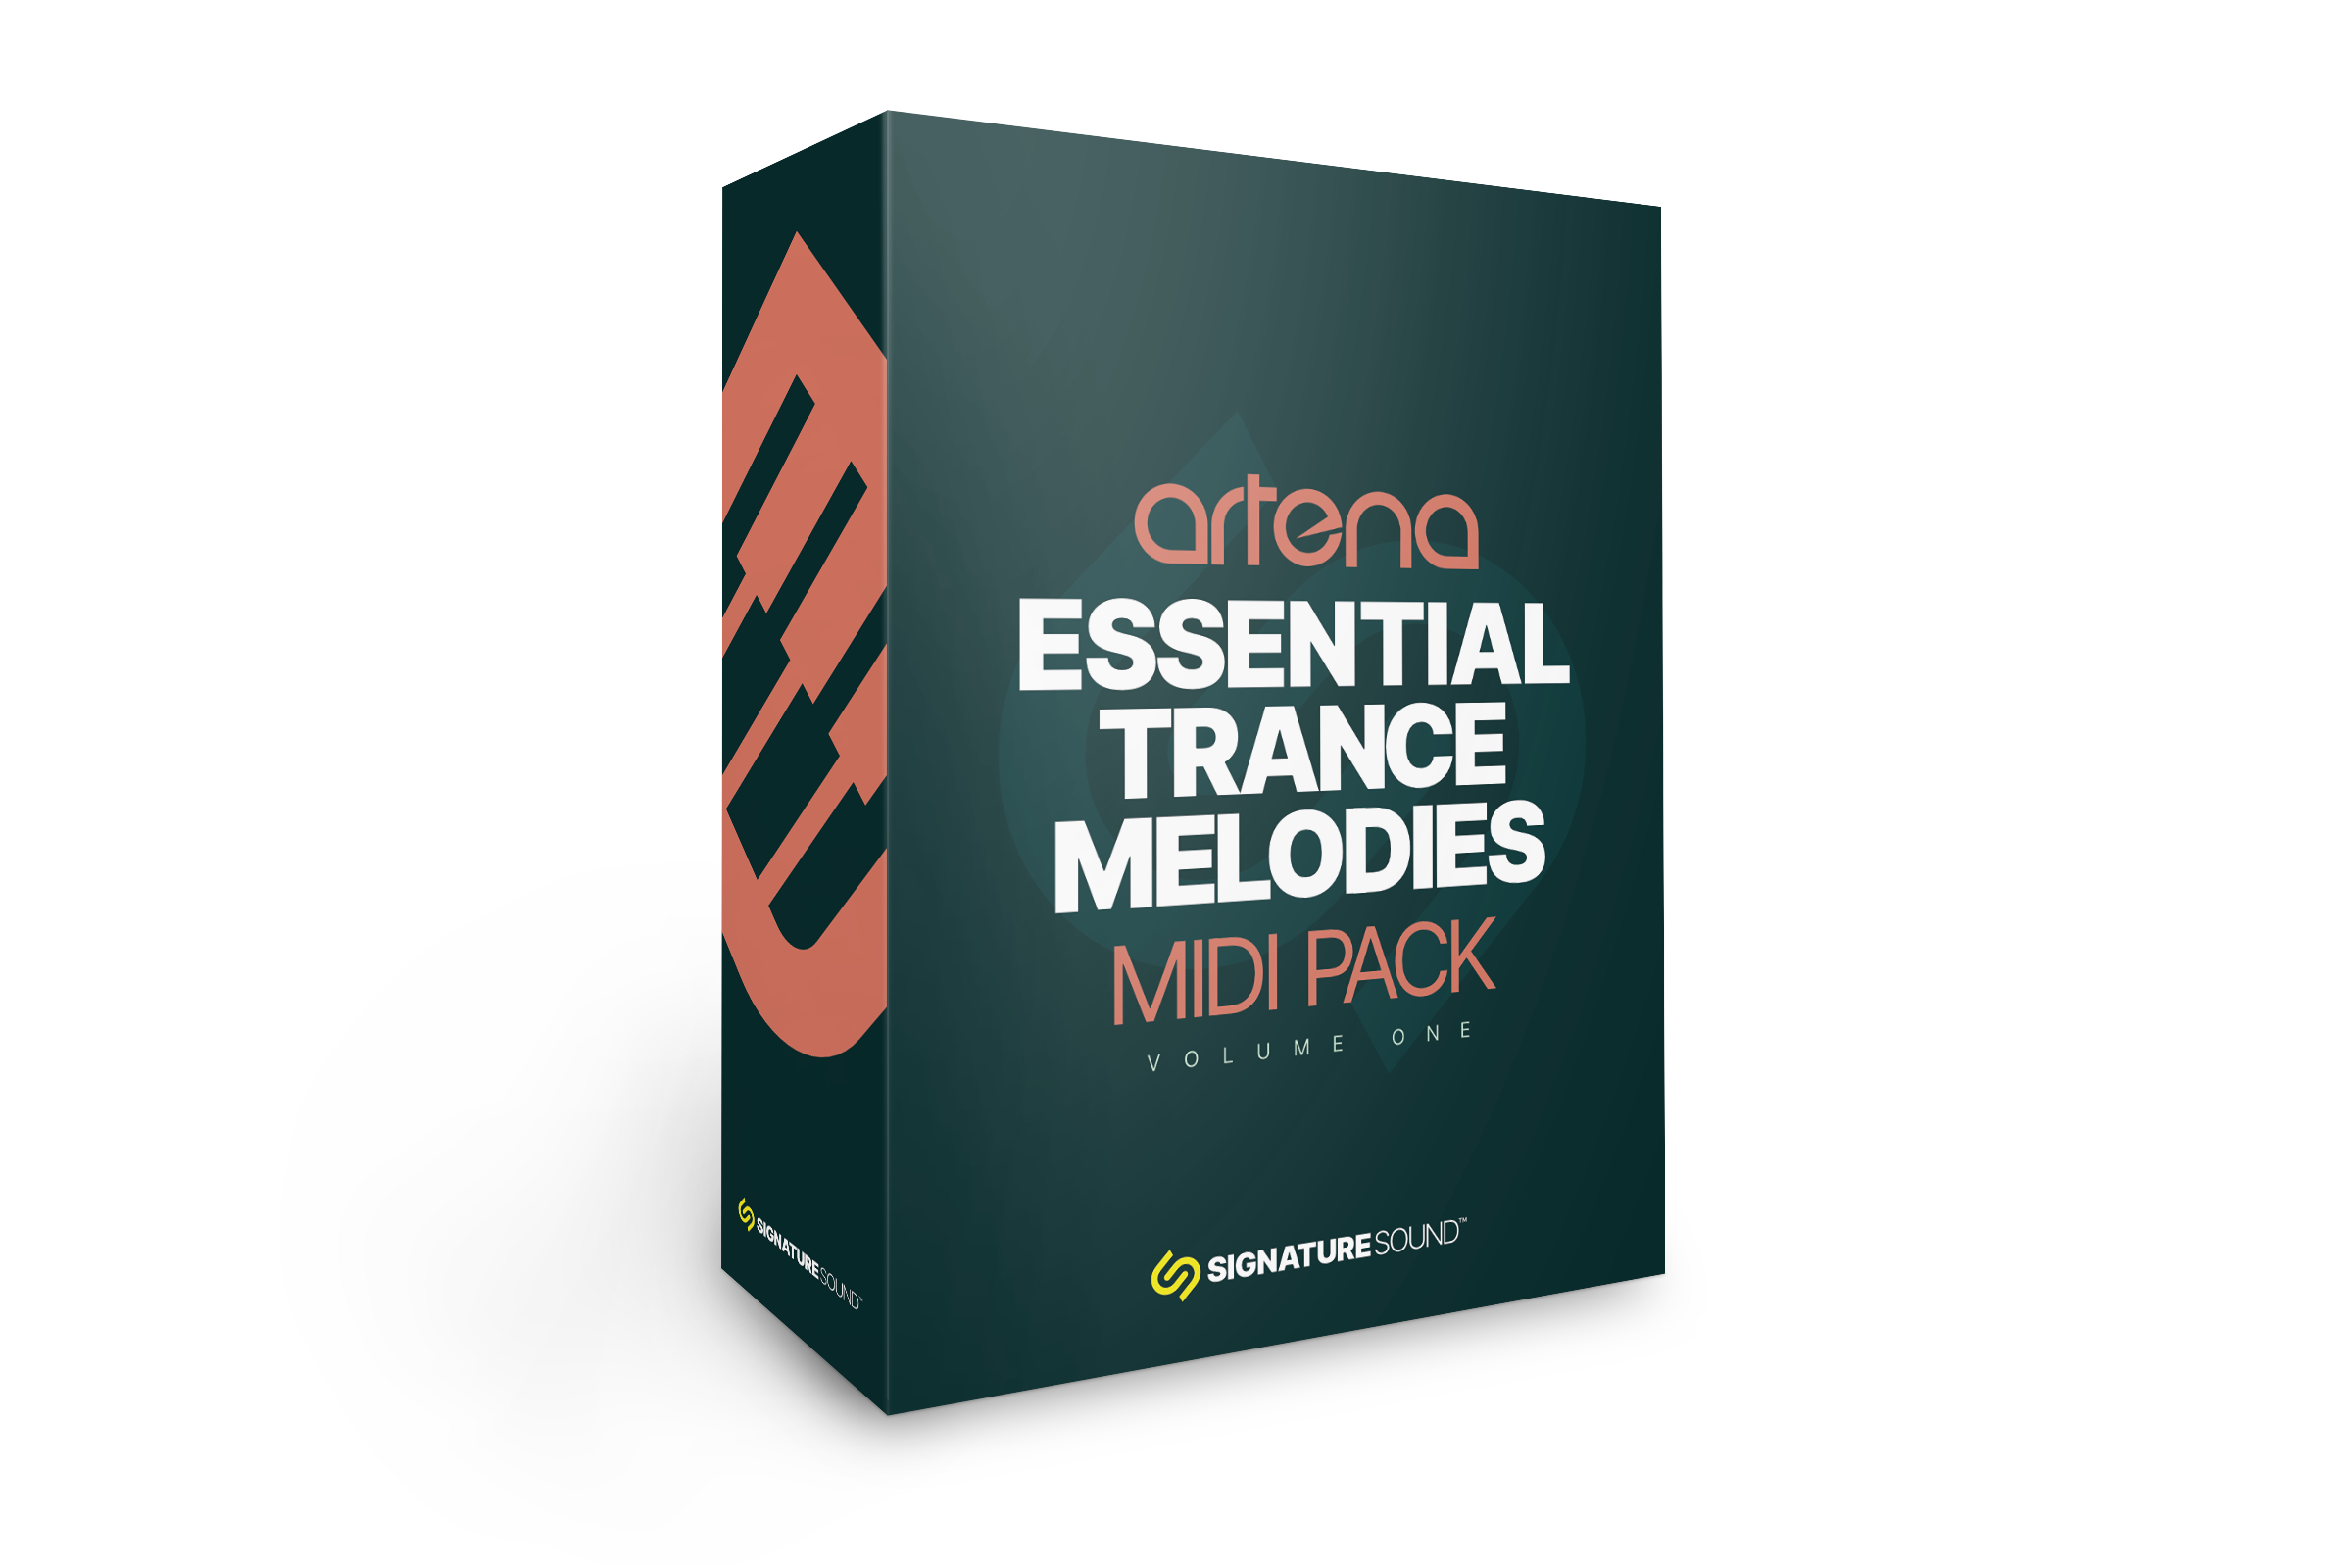 Artena Essential Trance Melodies [MIDI Pack] Volume One